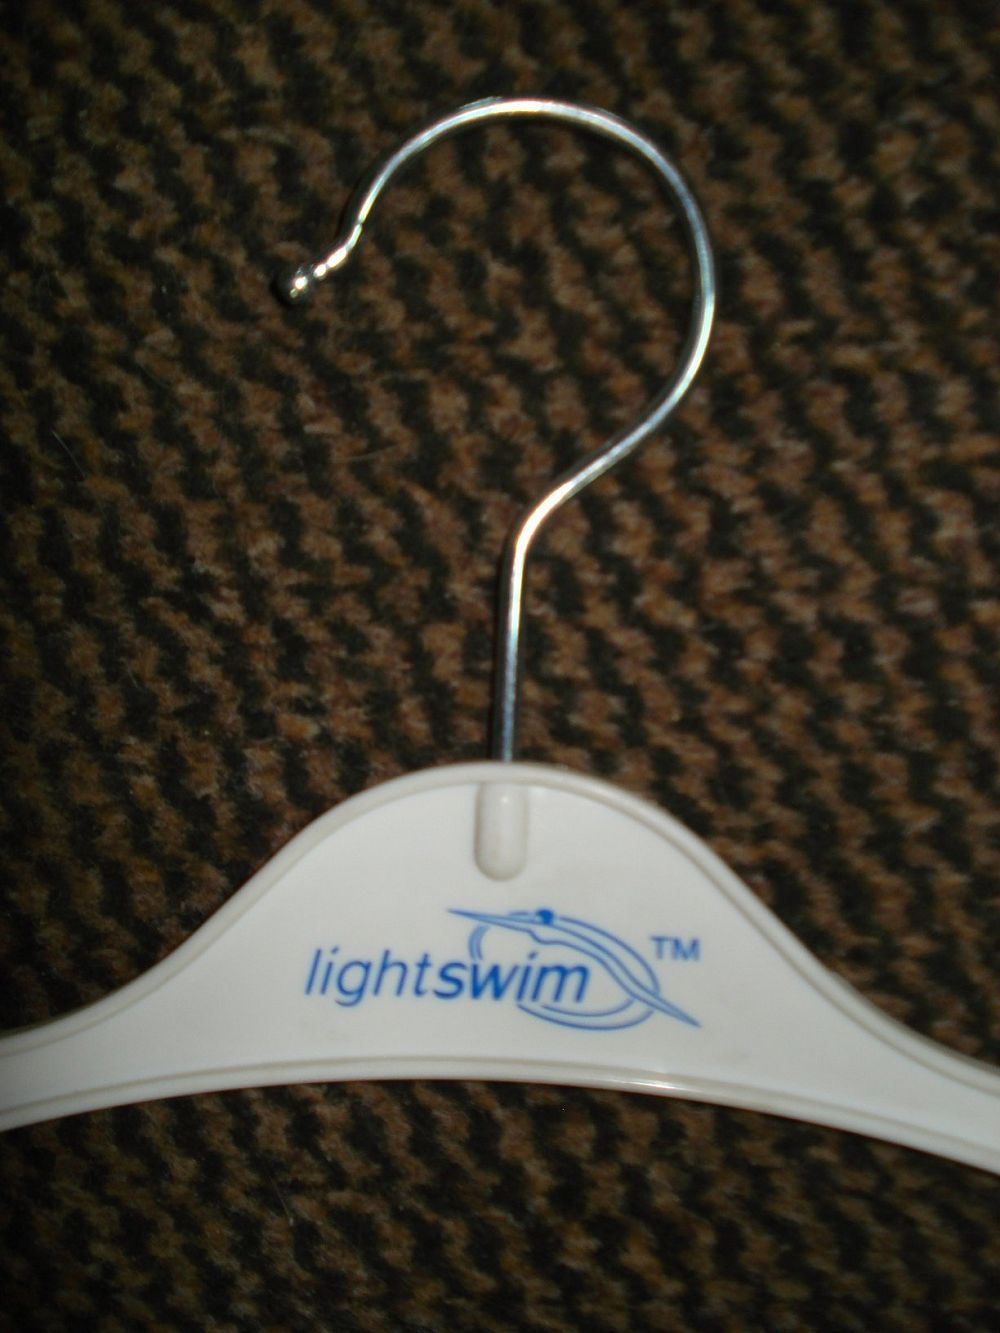 Манекен с логотипом "Lightswim"